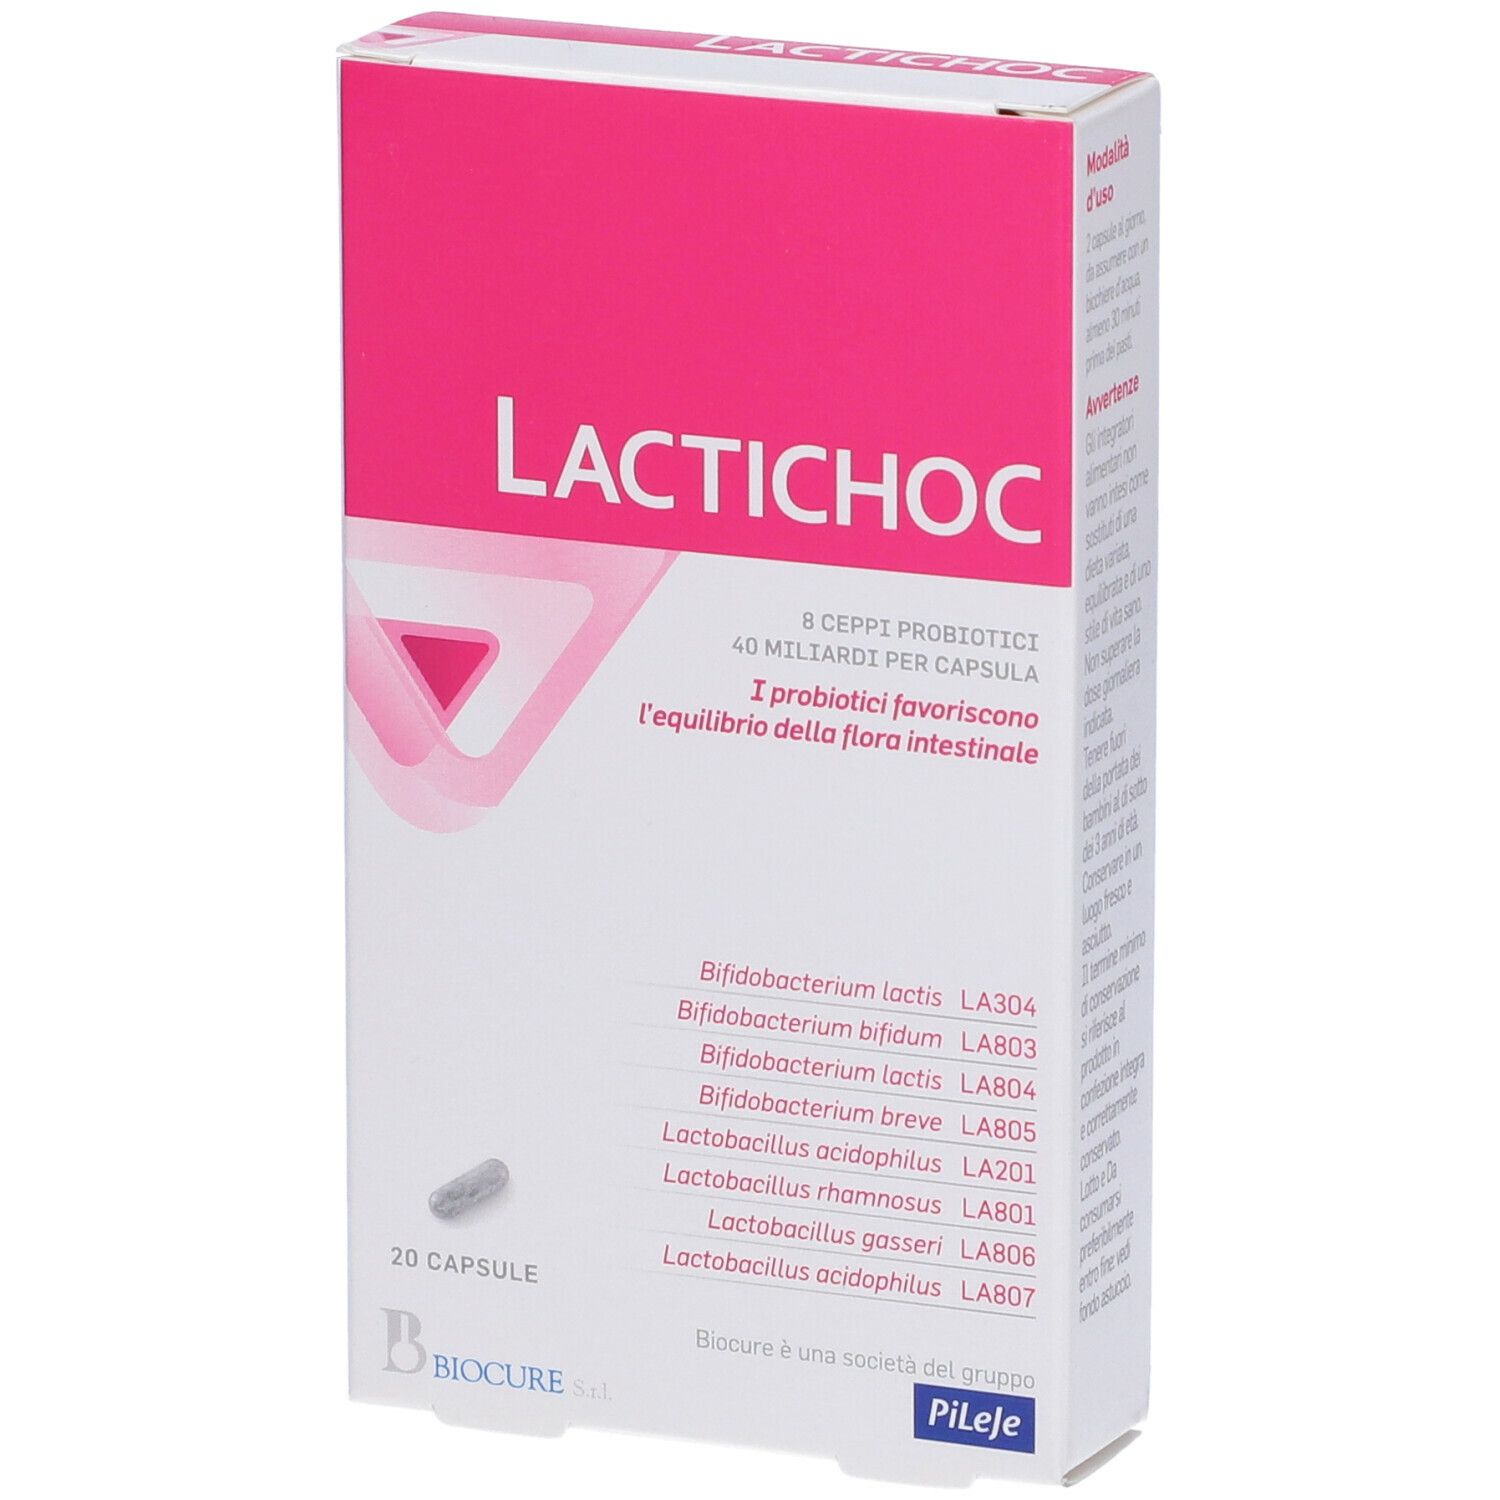 Biocure Lactichoc Capsule